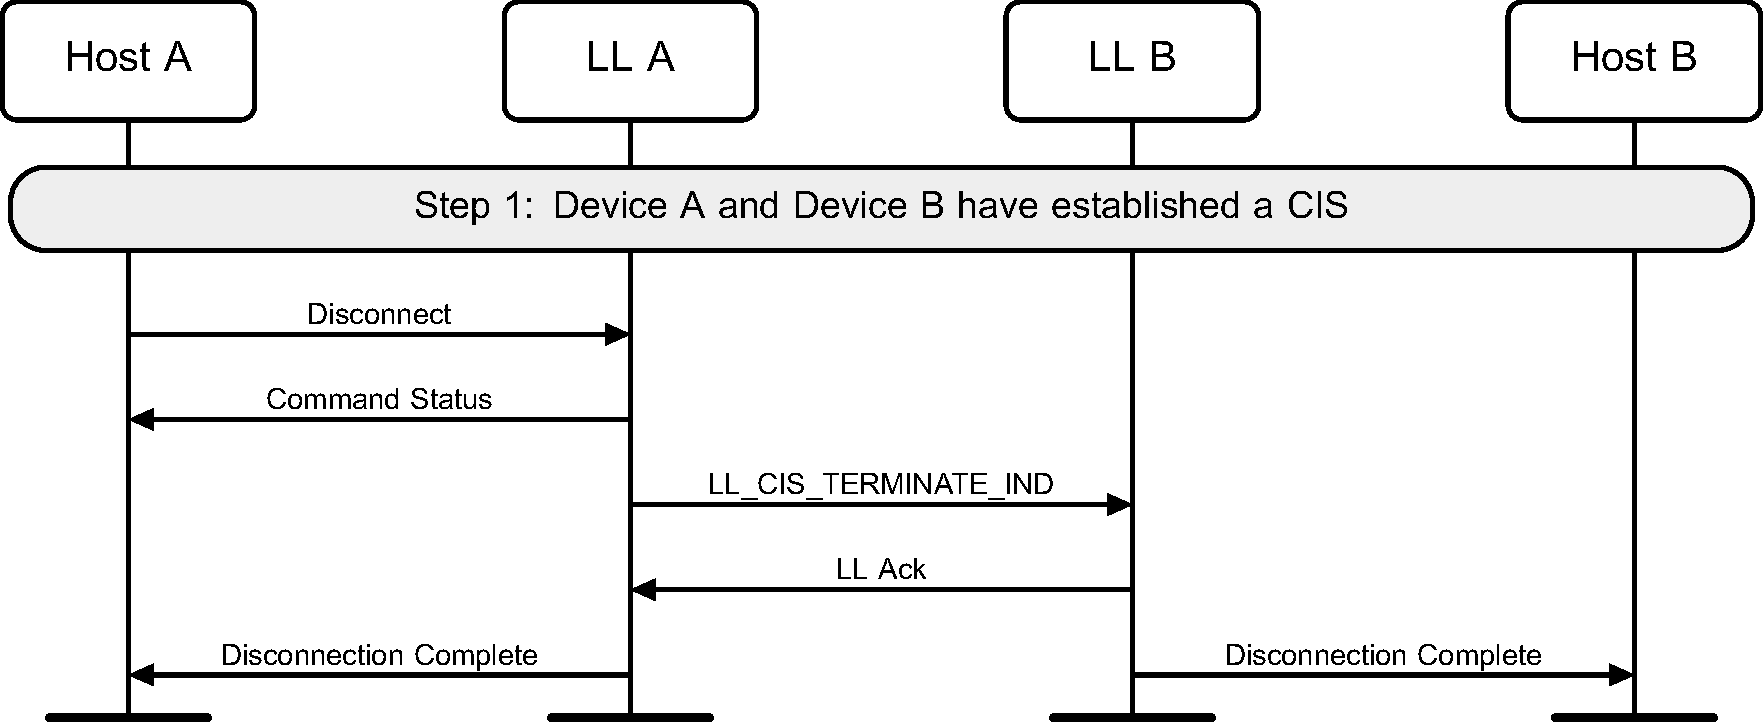 Device A terminates an established CIS